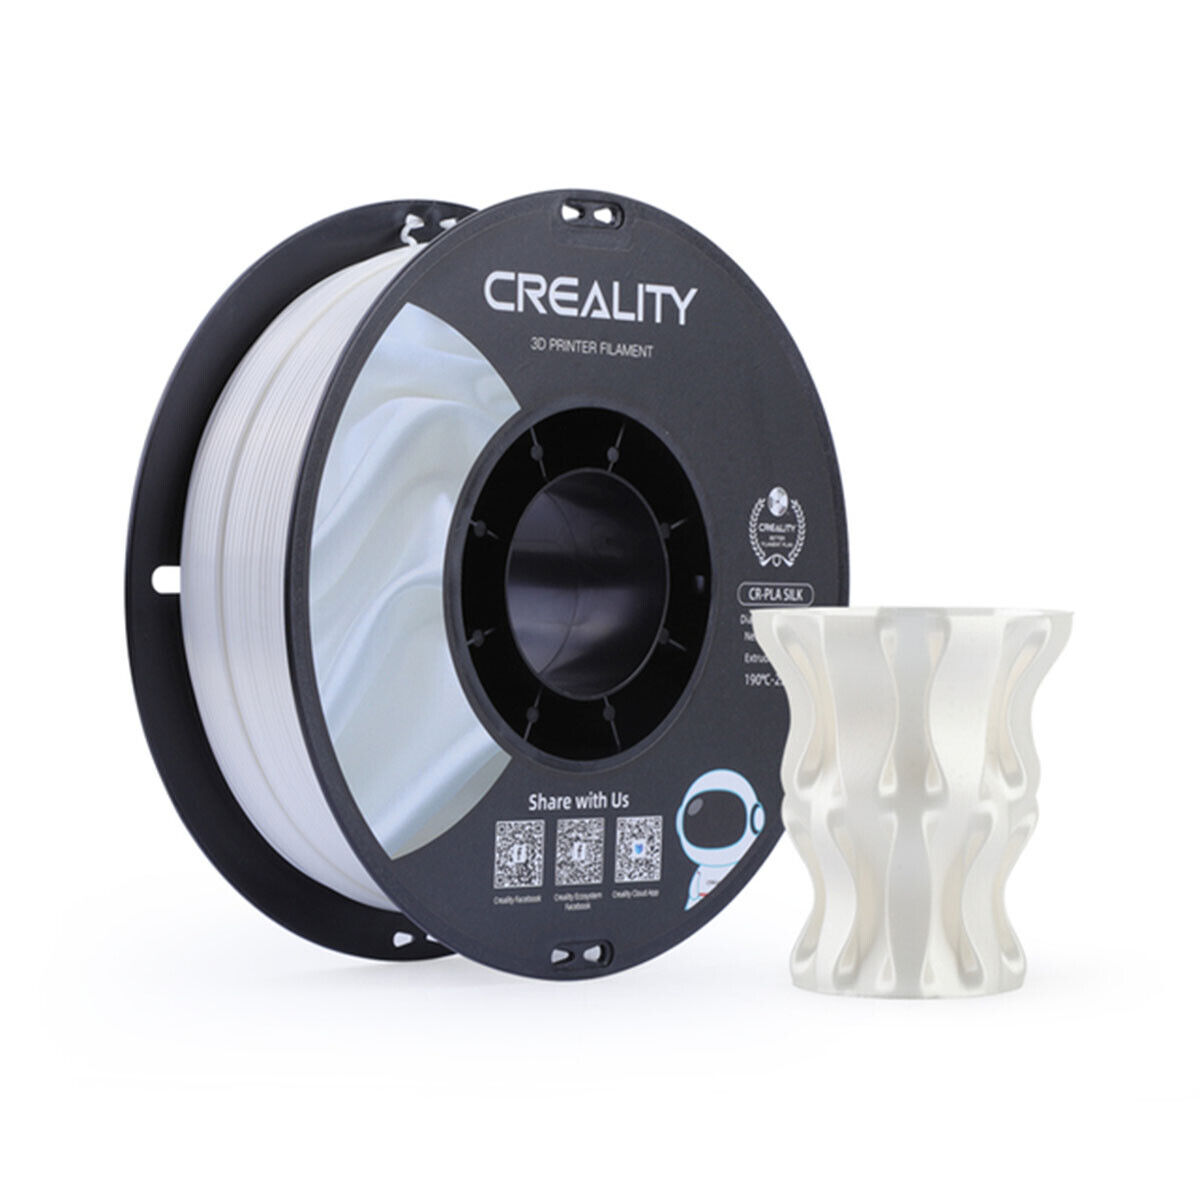 Creality PLA+/Matte/PETG /Ender/ABS/Silk PLA 3D Printer Filament 1.75mm 1KG